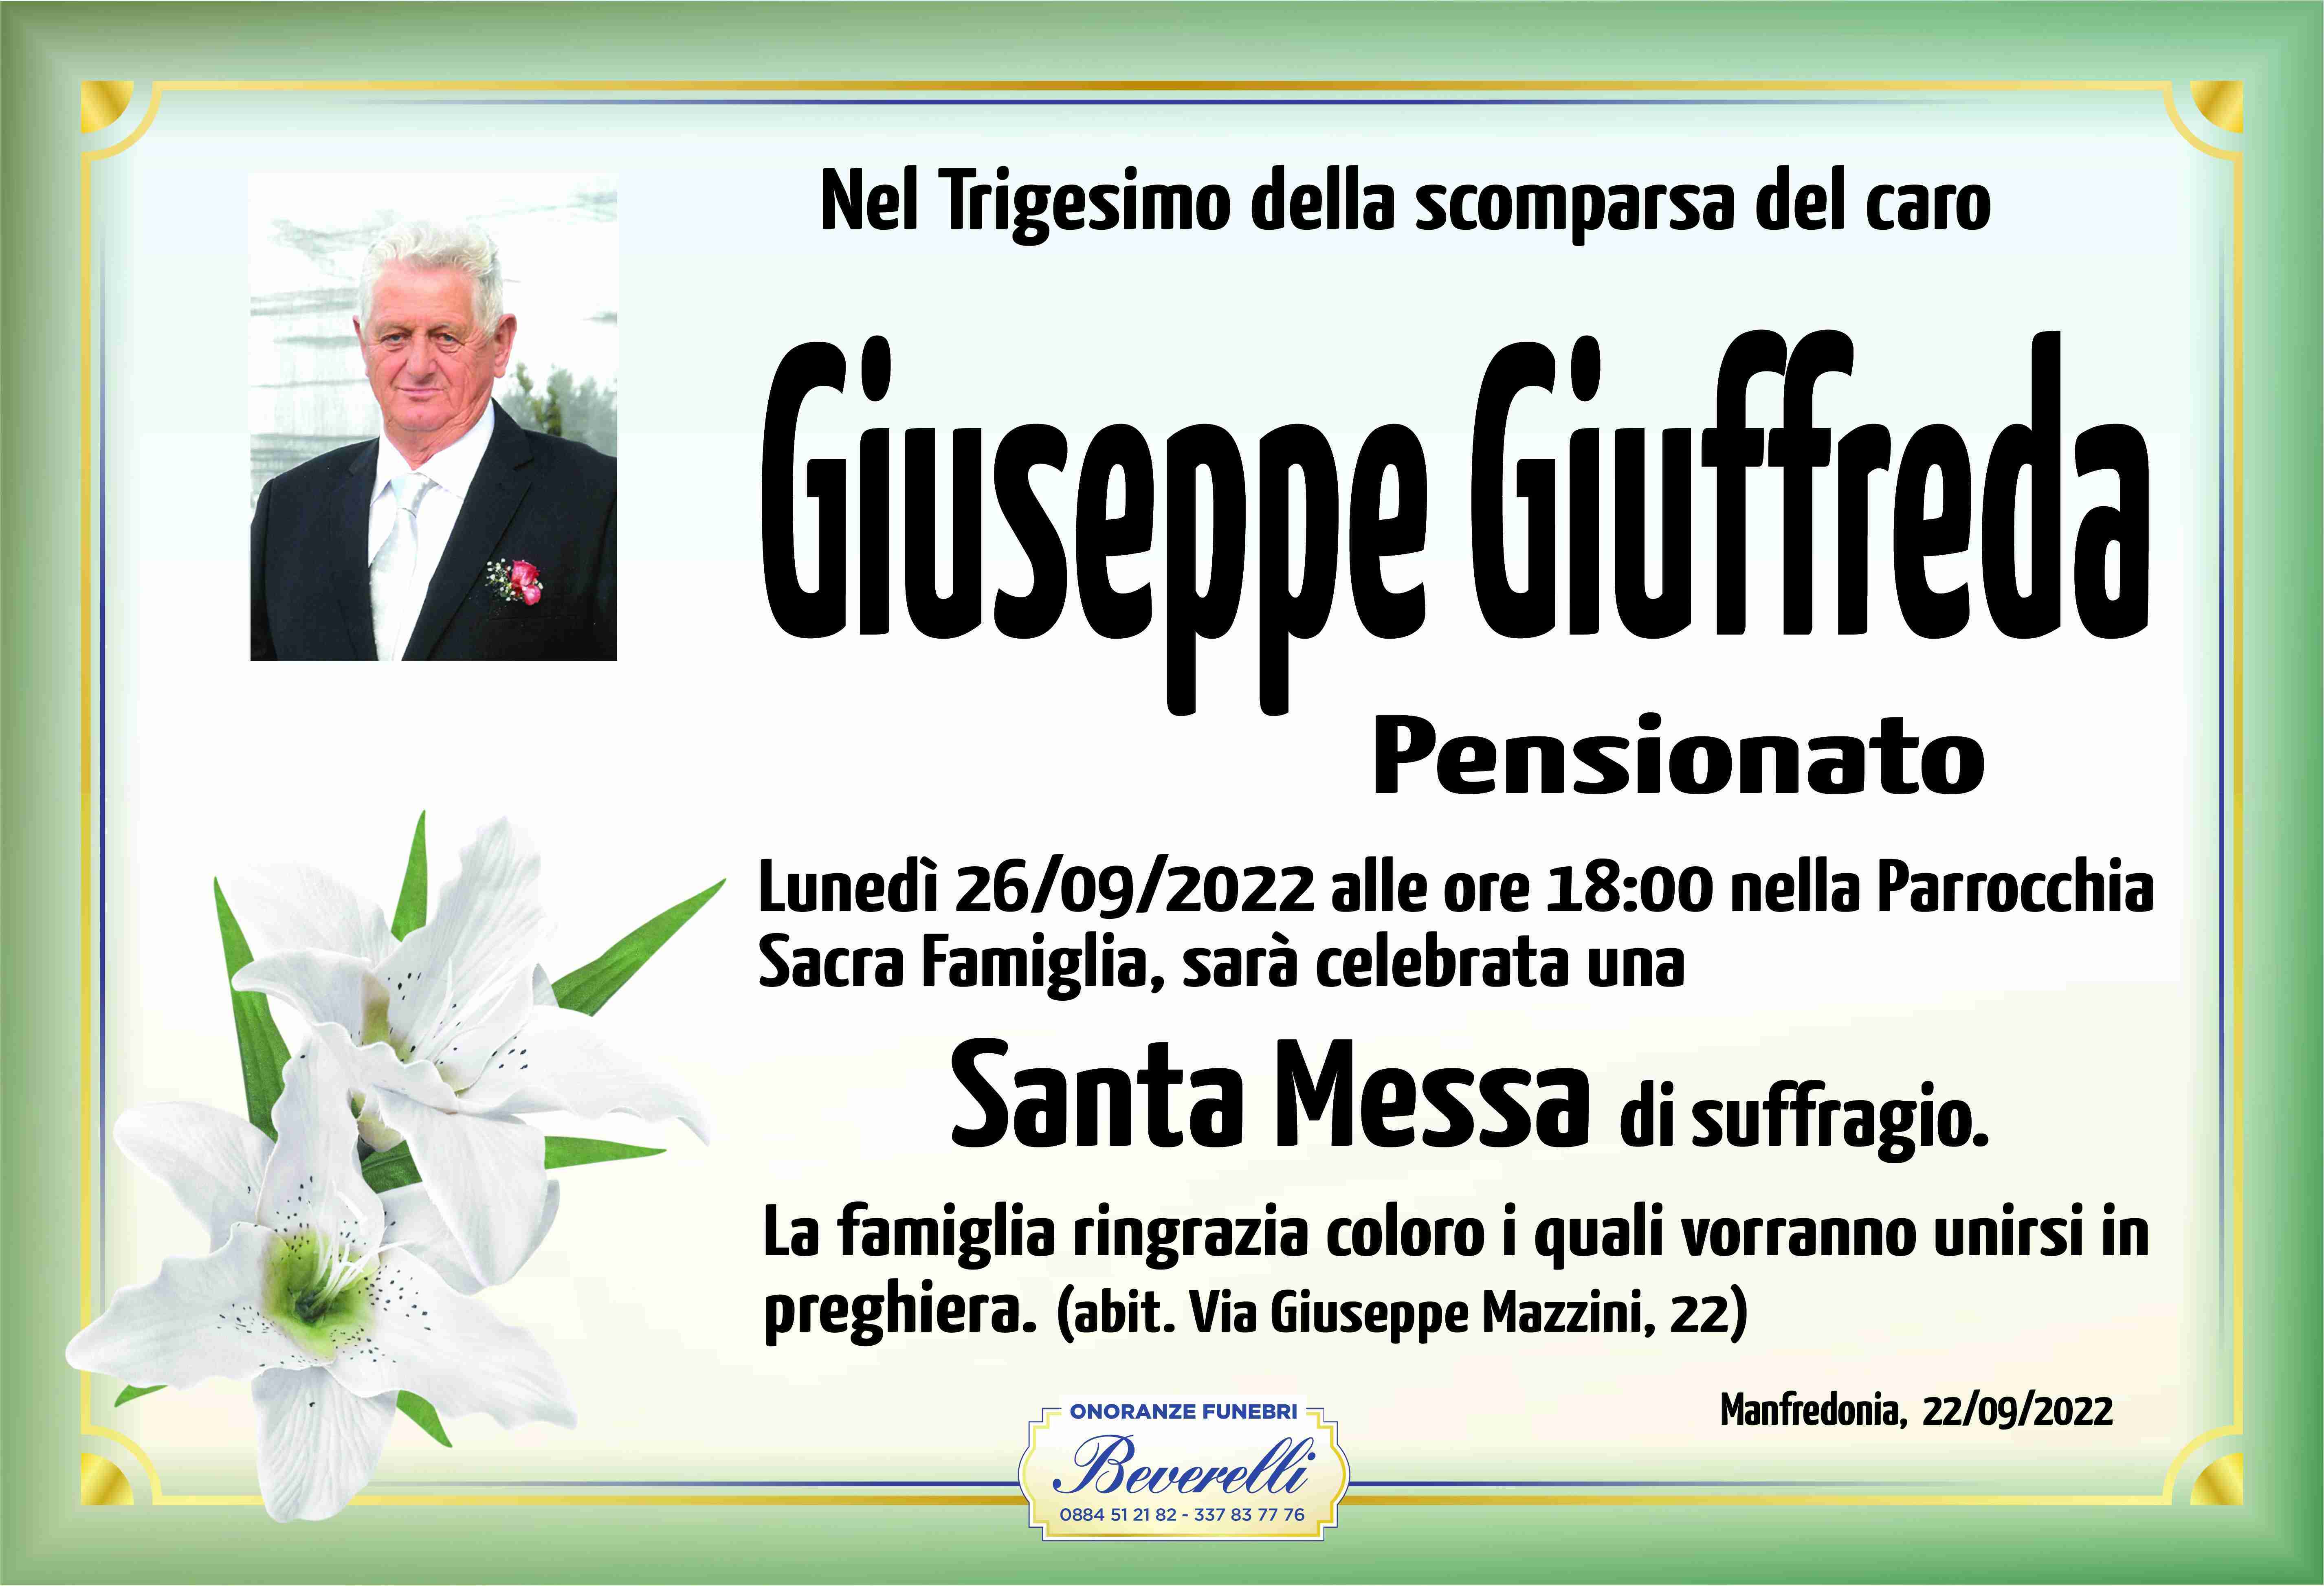 Giuseppe Giuffreda